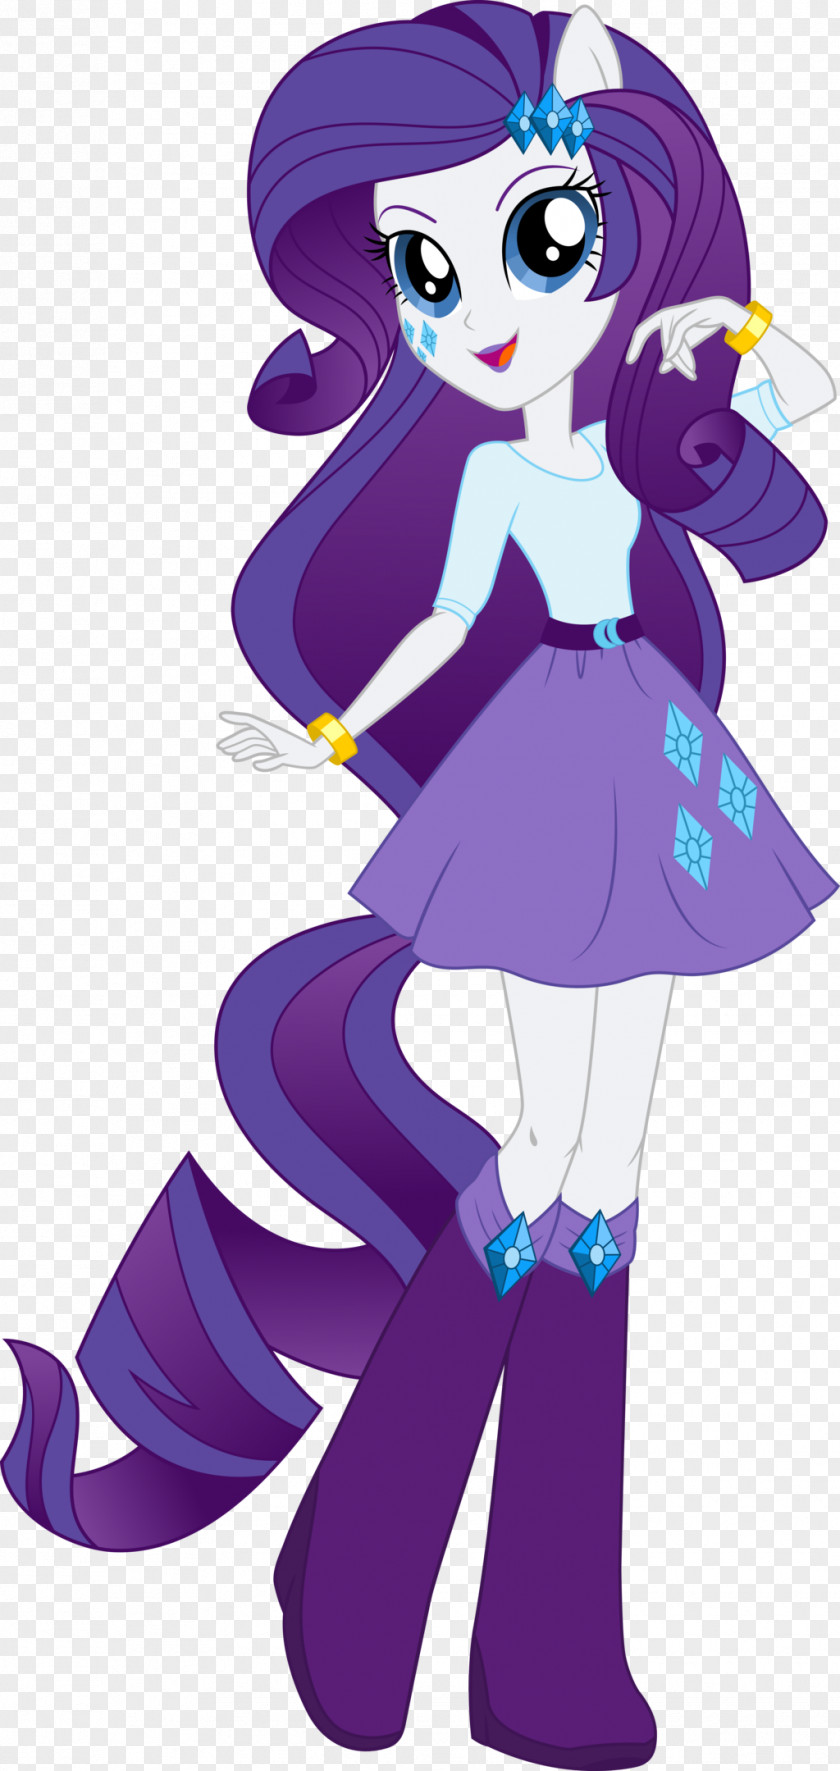 Rarity Equestria Girls Polyvore Rainbow Dash Twilight Sparkle Pony Princess Luna PNG